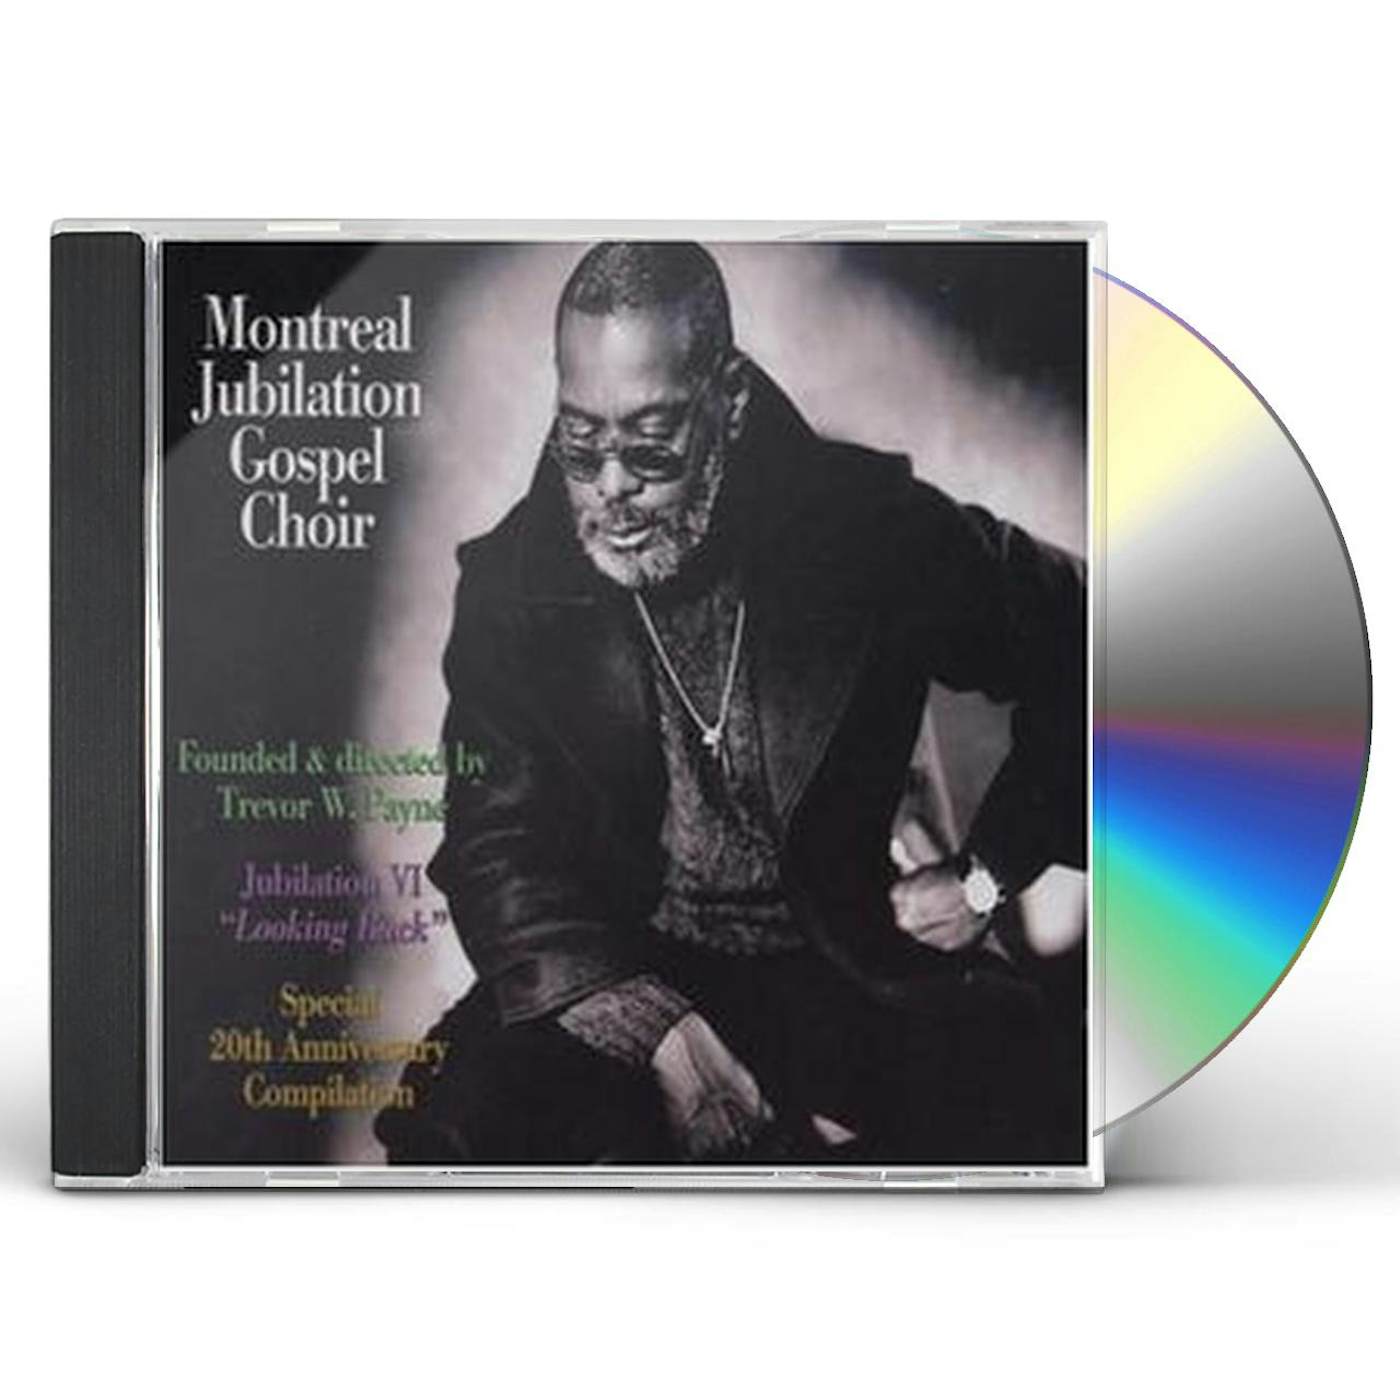 Montreal Jubilation Gospel Choir JUBILATION 6: LOOKING BACK CD